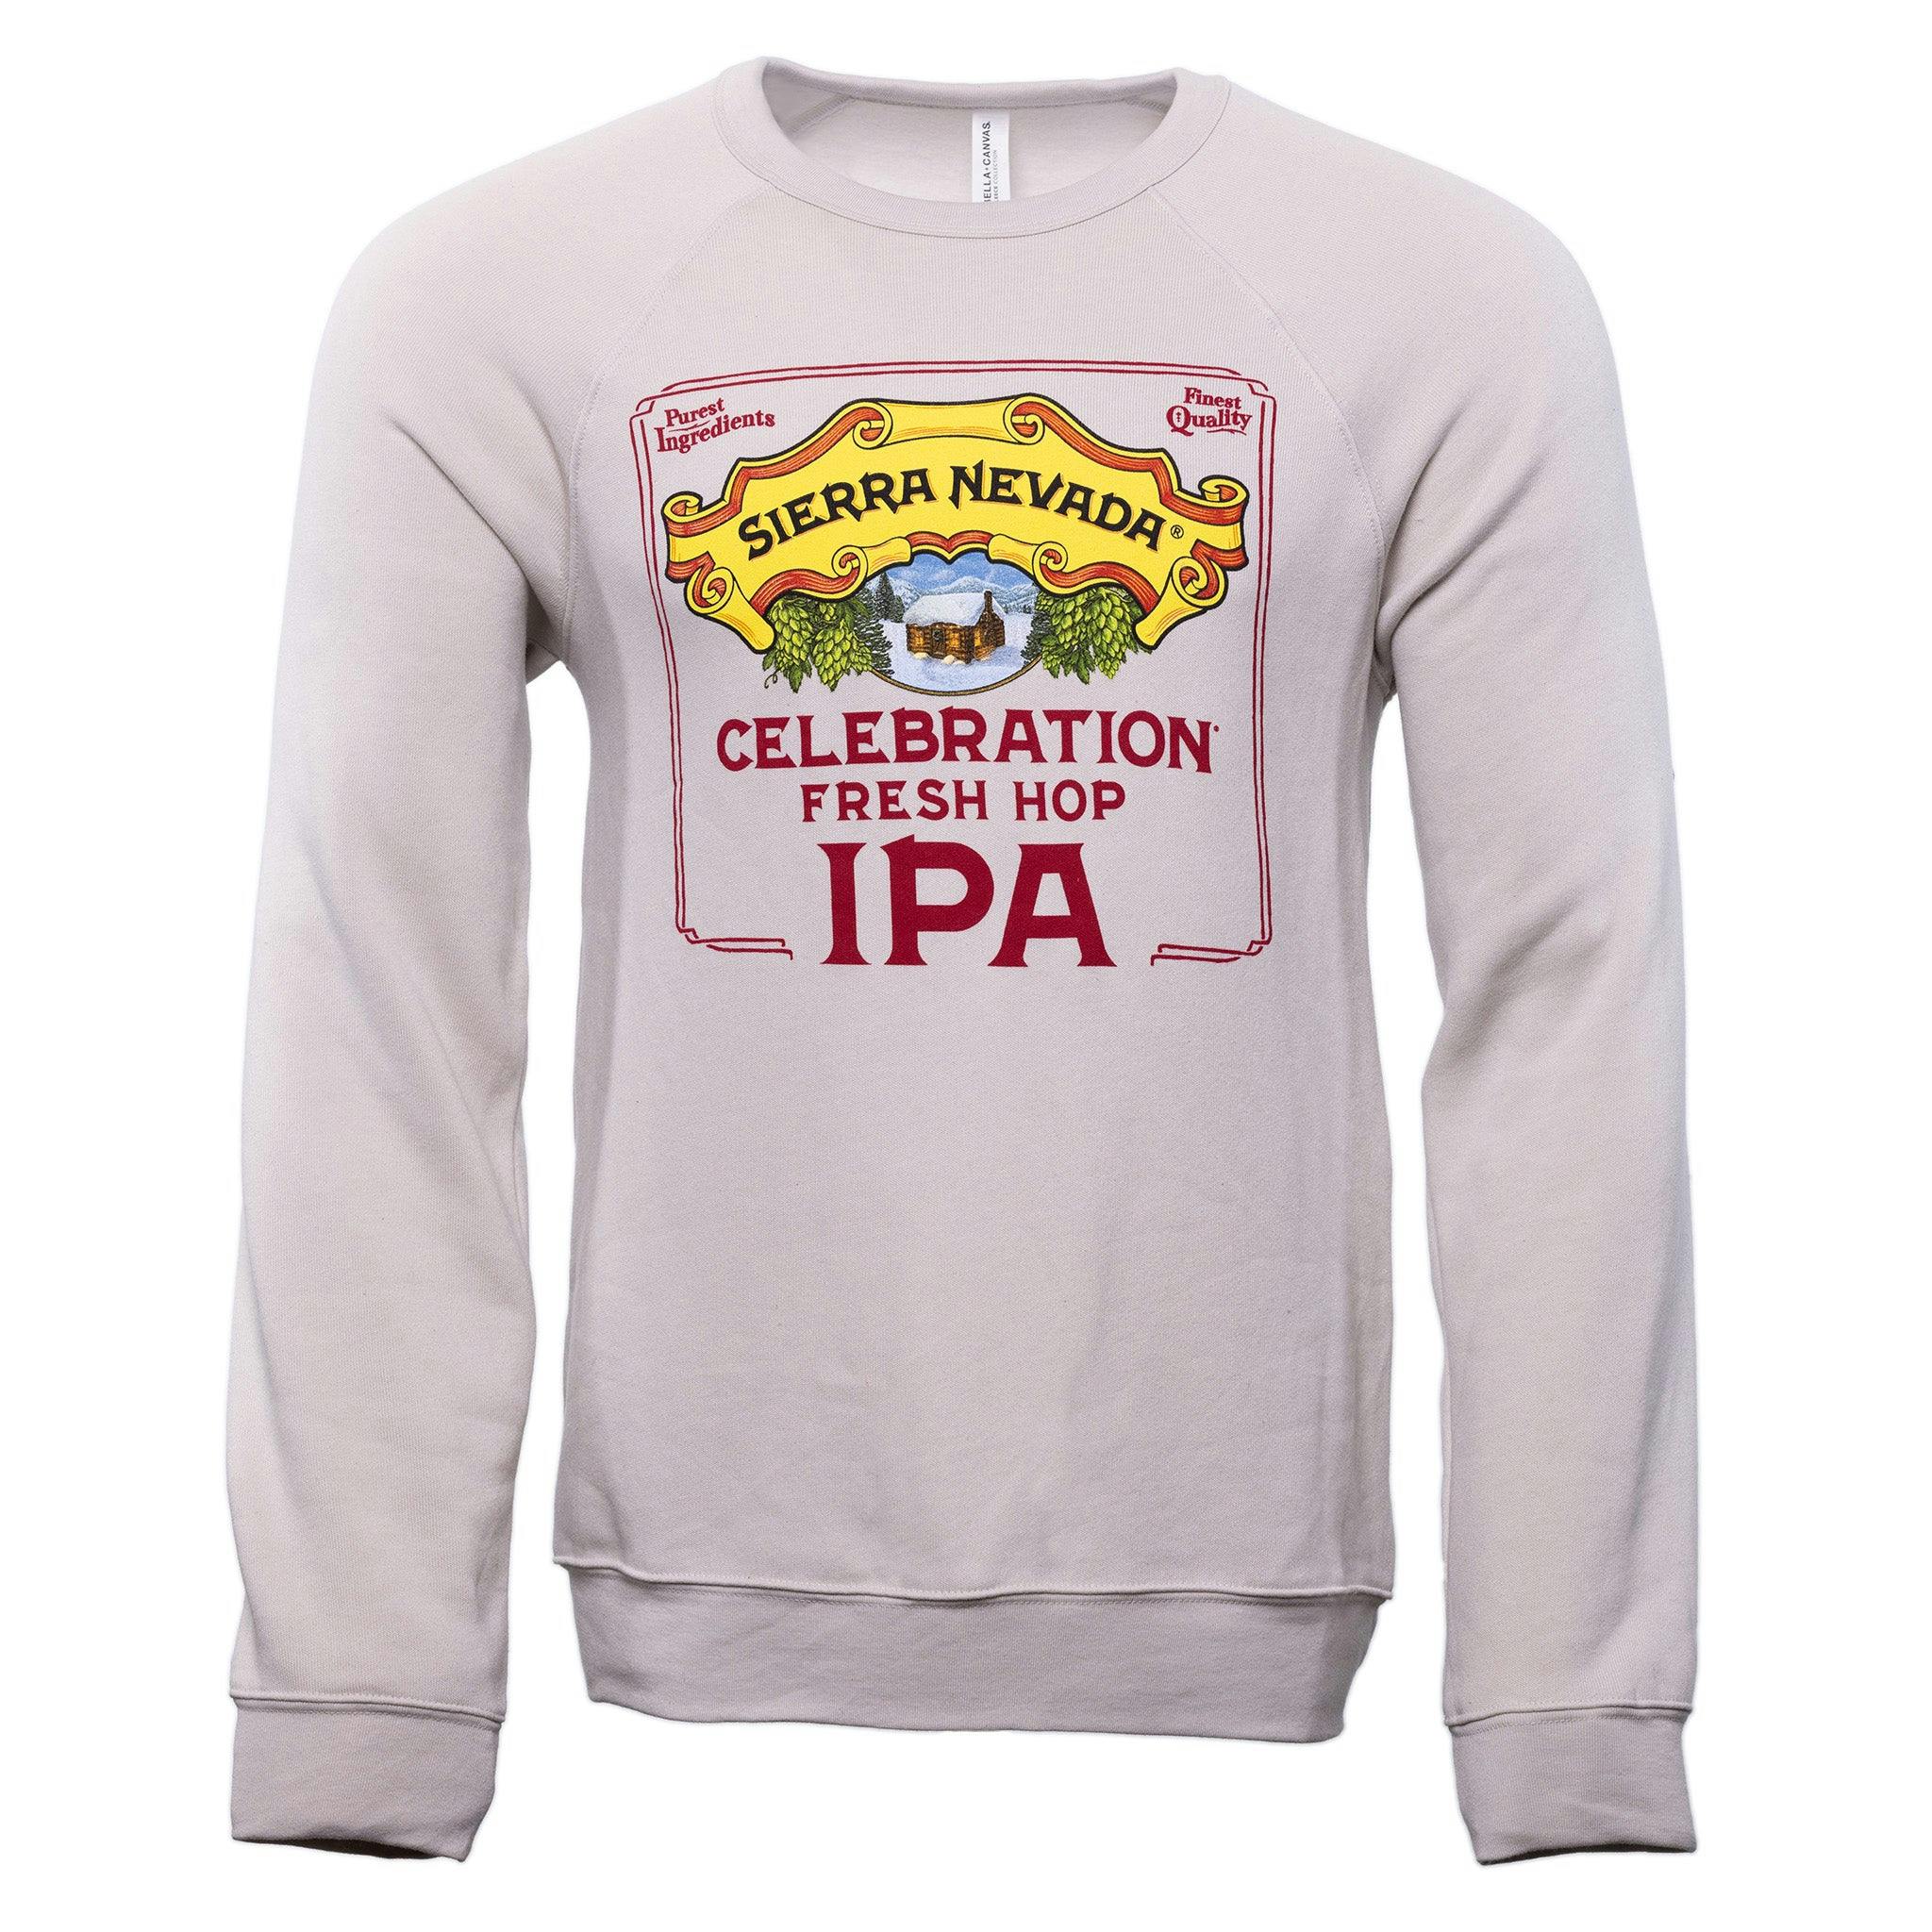 Sierra Nevada Brewing Co. Celebration Crewneck Sweatshirt - front view